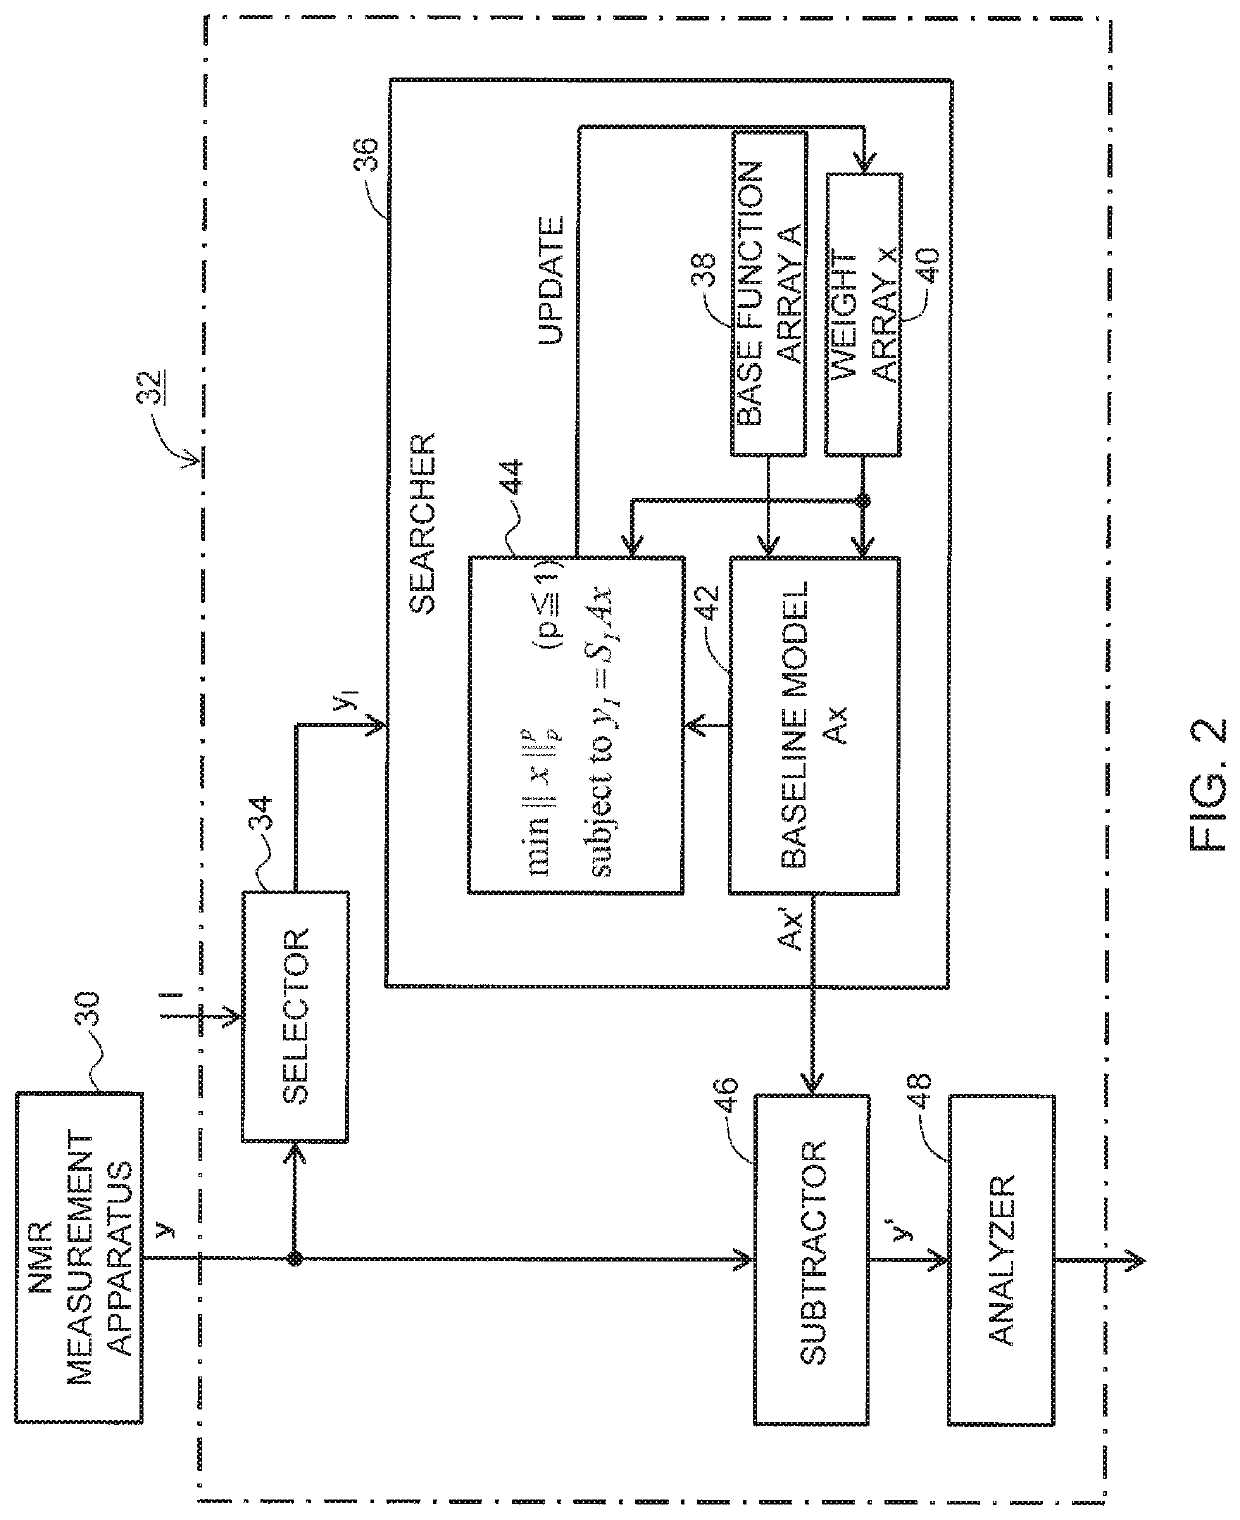 Apparatus and method for processing spectrum